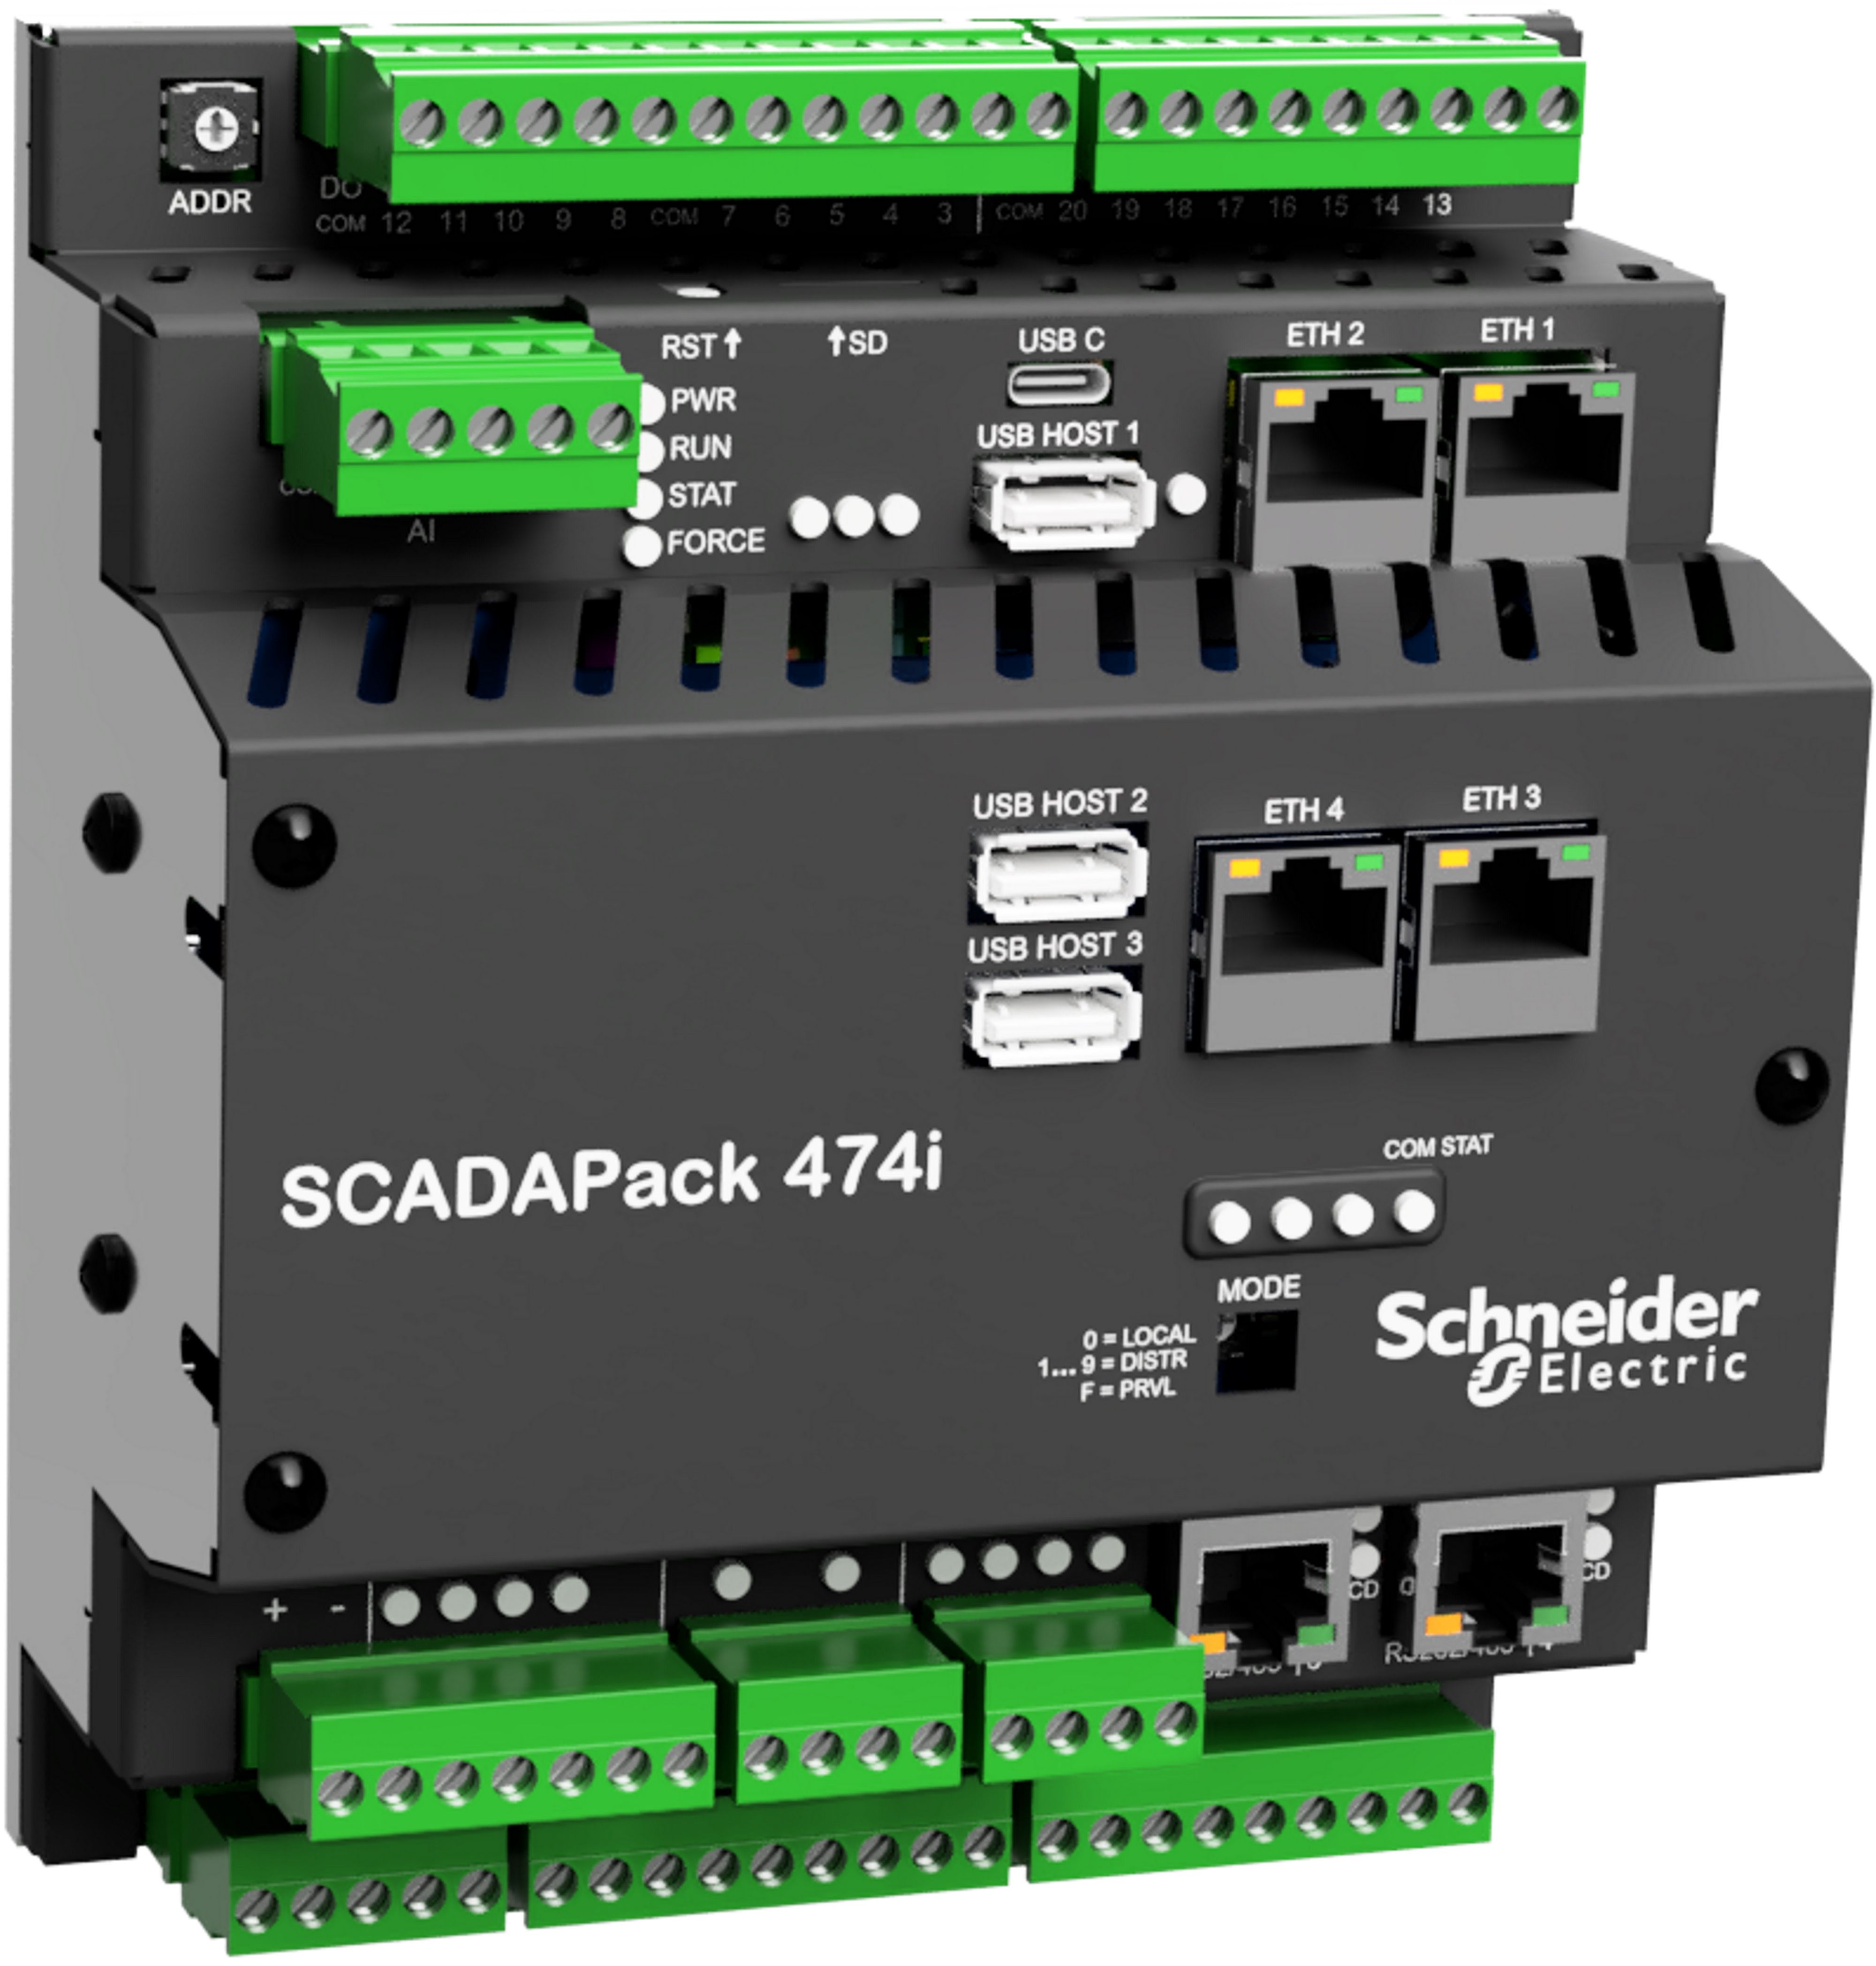 Schneider Electric lanza dos nuevos controladores SCADAPack Smart RTU con Linux integrado